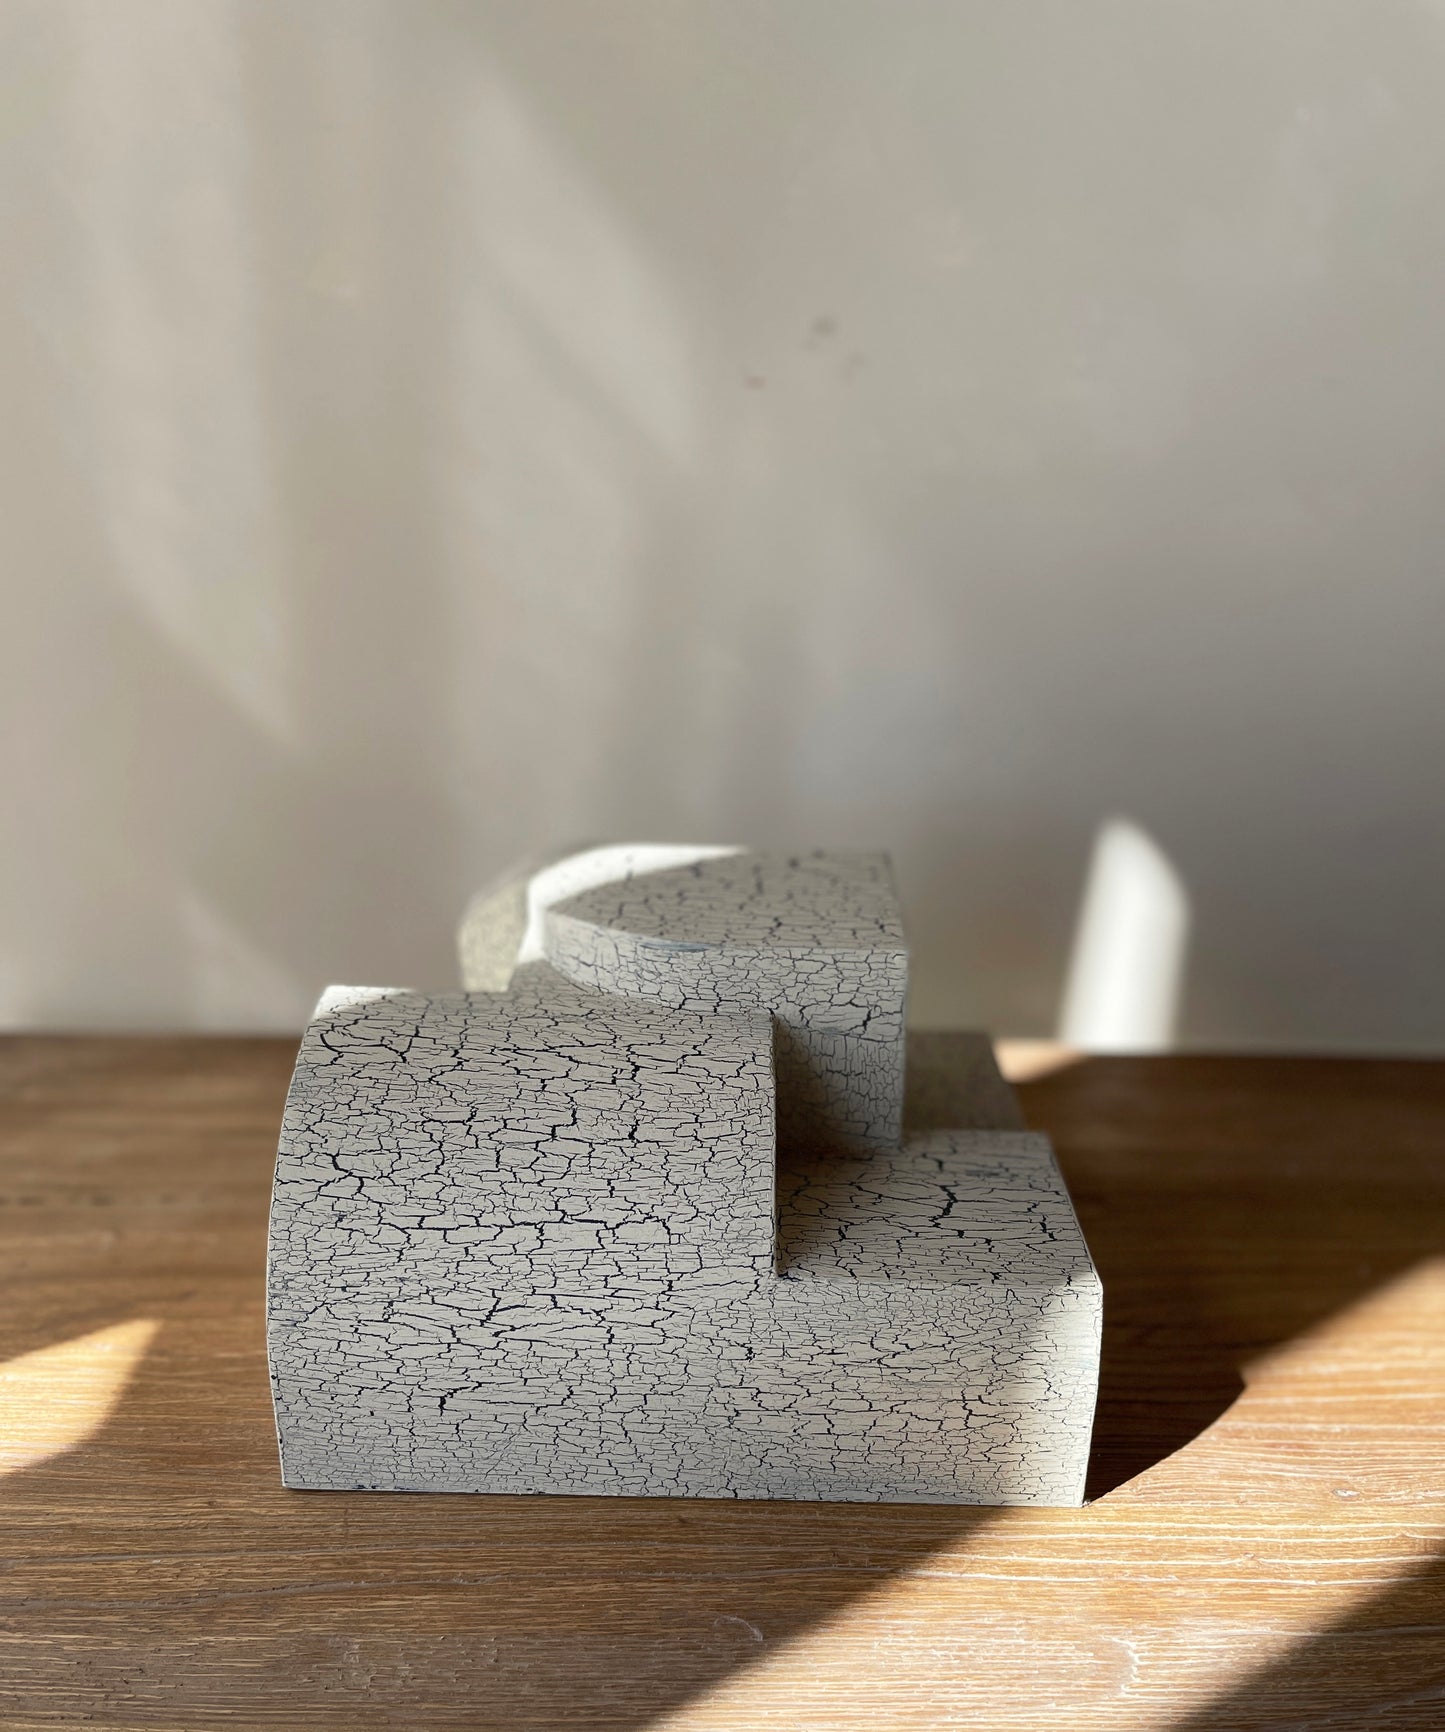 'Bep' Sculpture in crackle by Edith Beurskens and Ilse van Stoltz